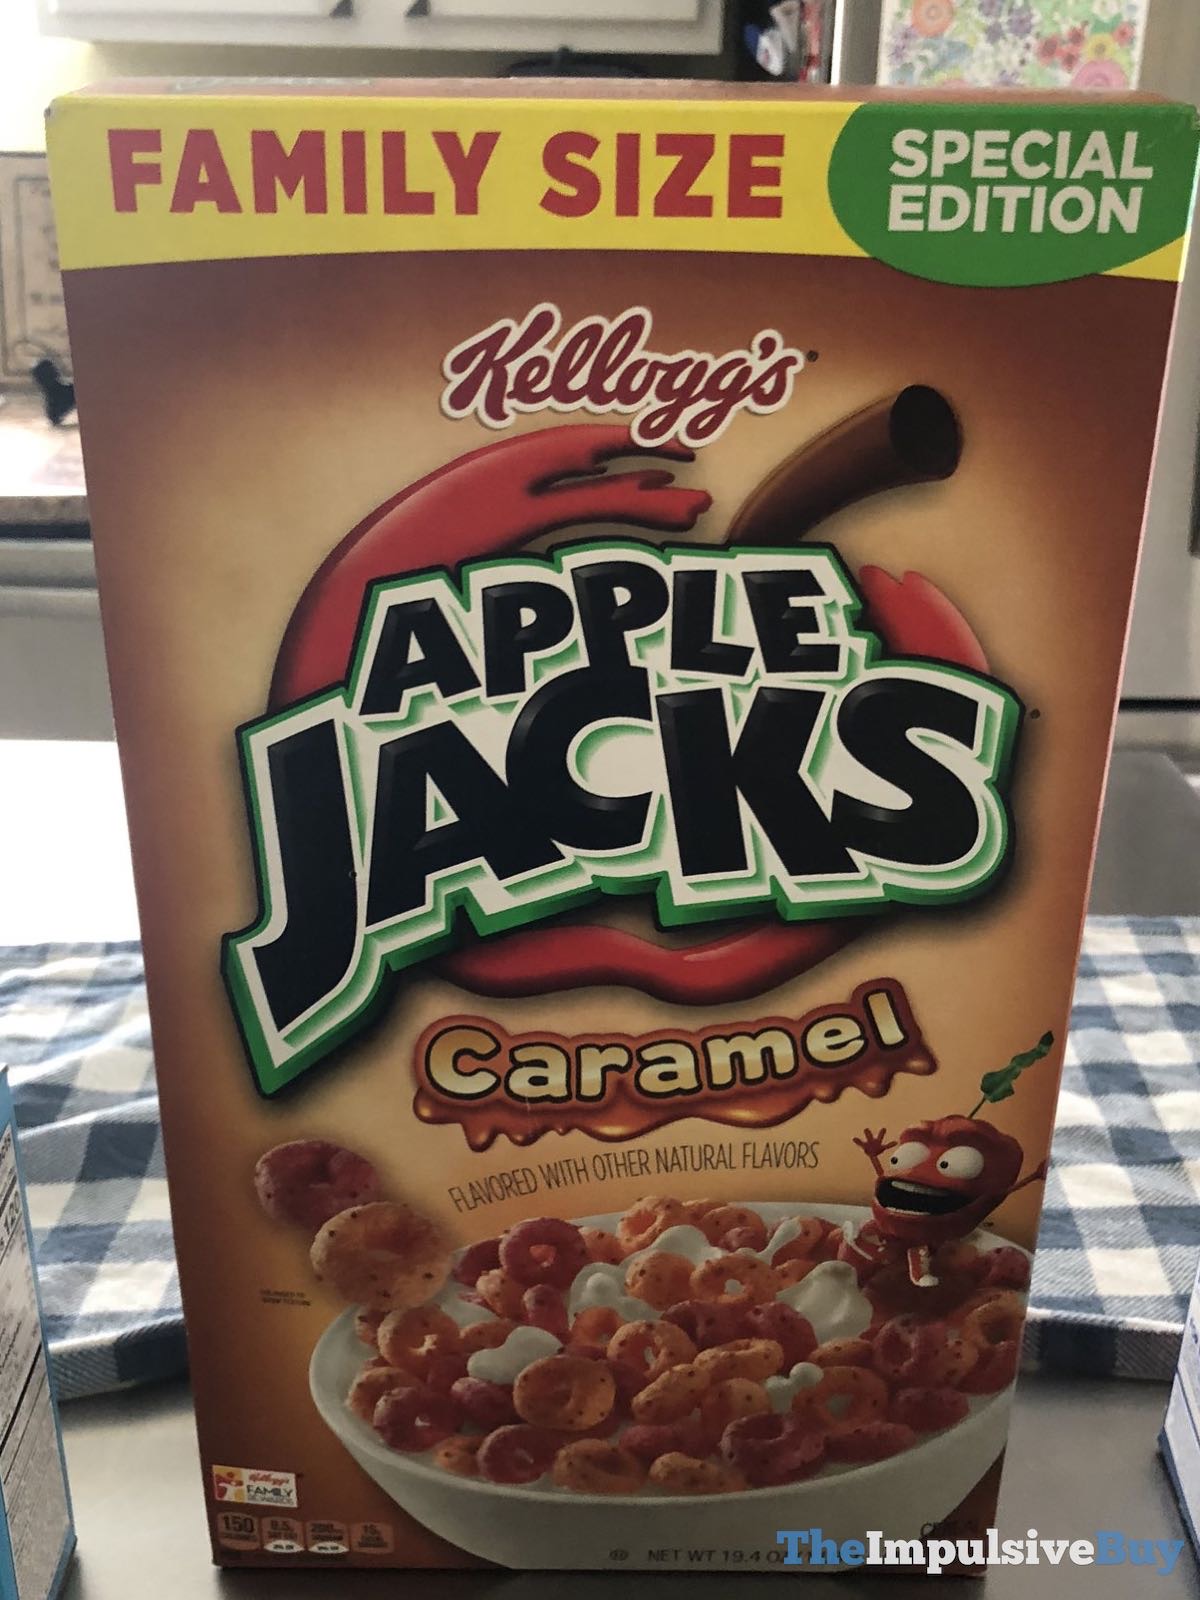 Kelloggs-Special-Edition-Apple-Jacks-Caramel-Cereal.jpeg